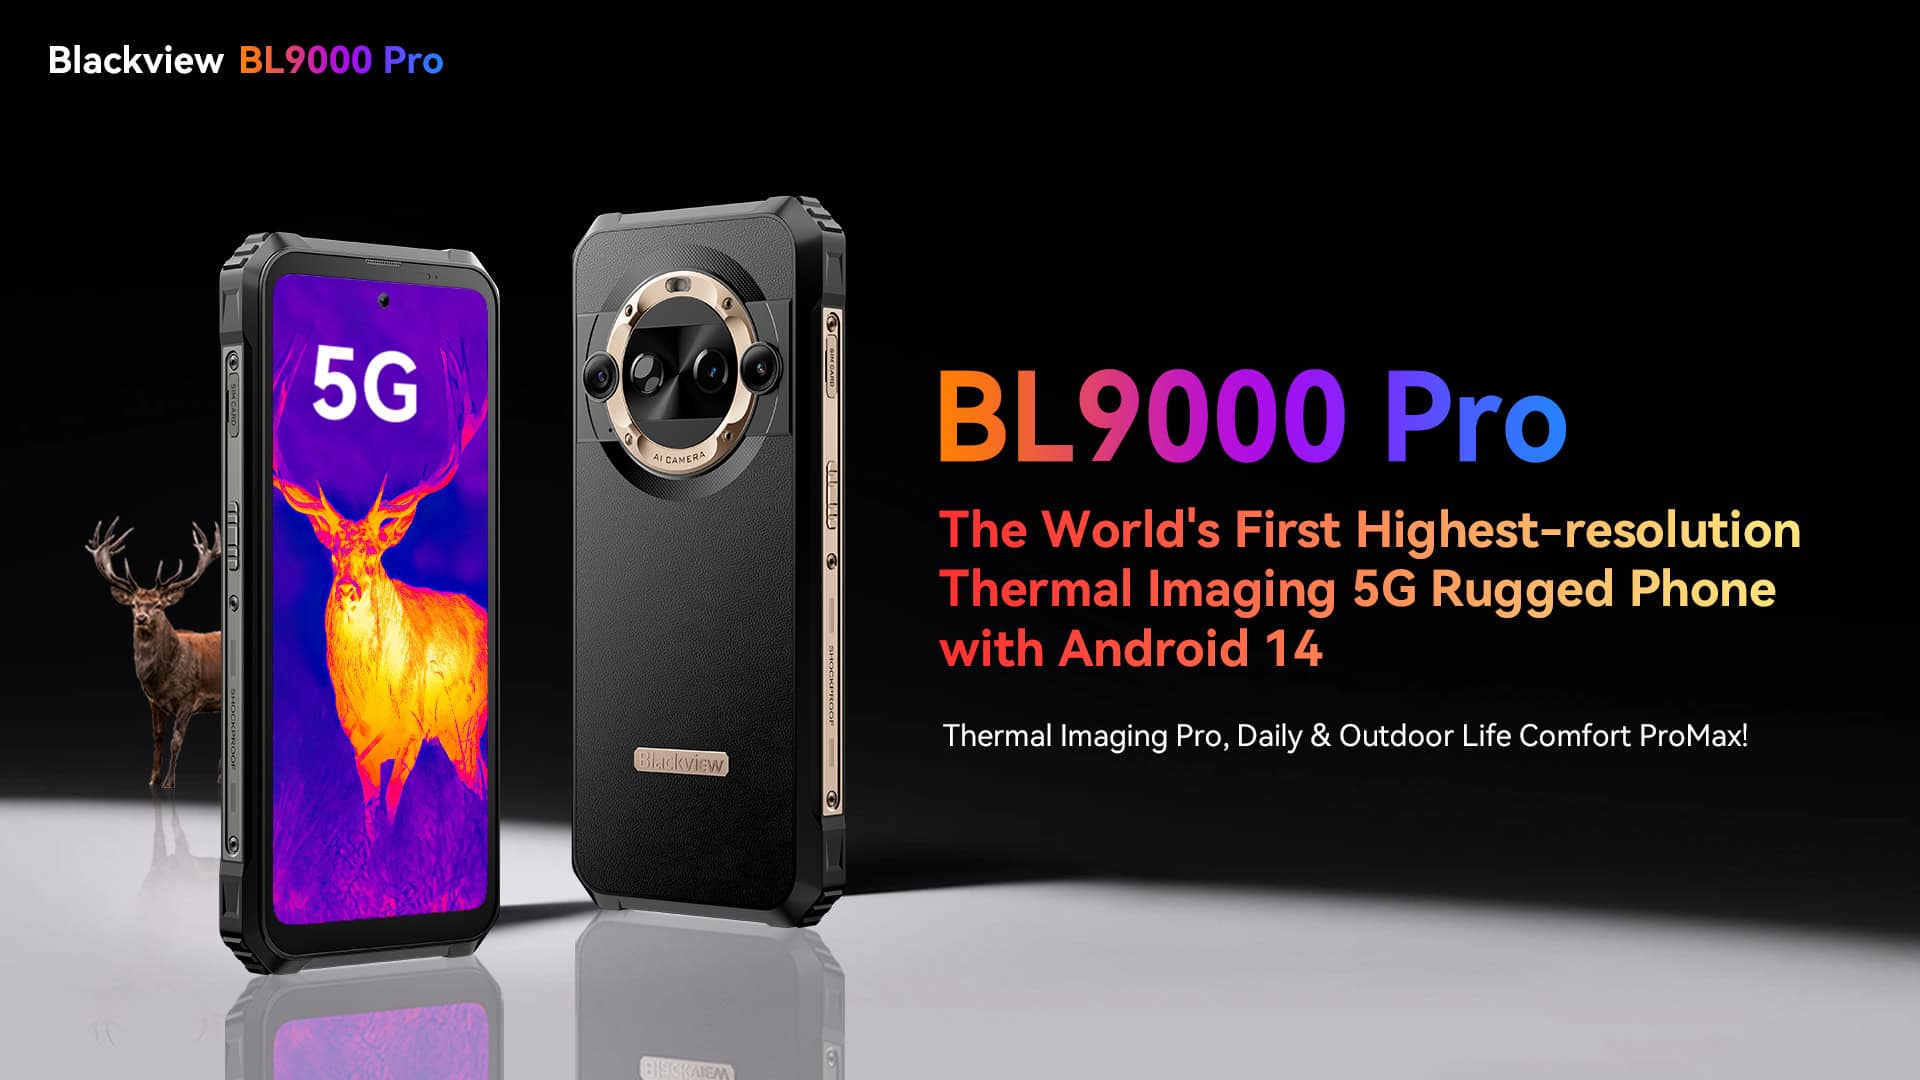 El teléfono de imagen térmica Blackview BL9000 Pro ya está disponible